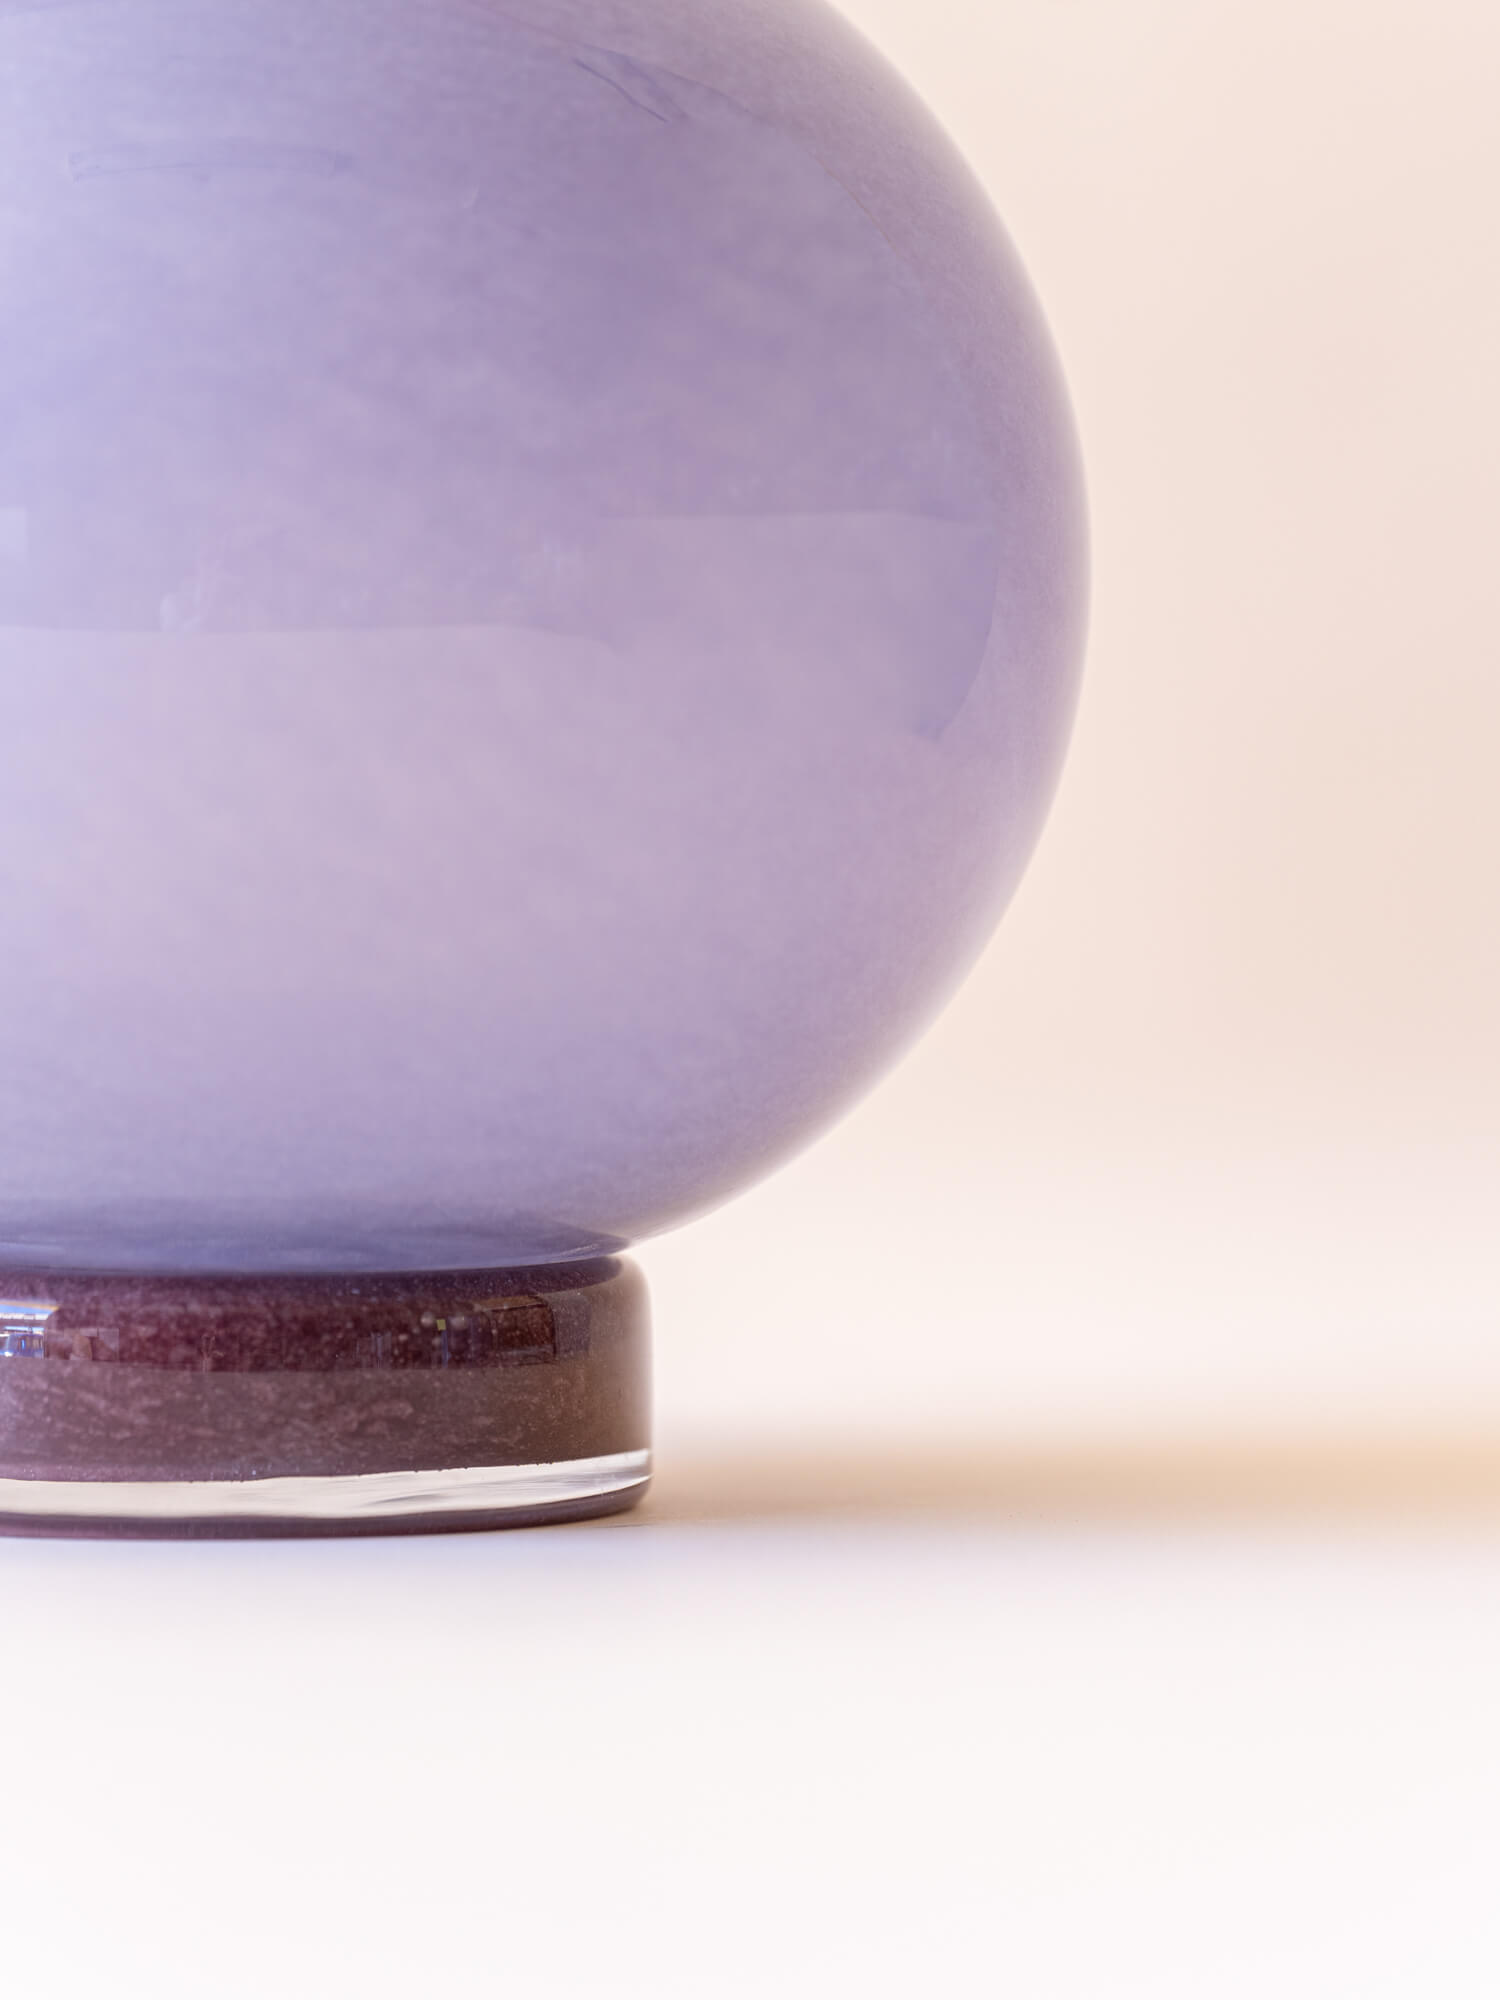 BROSTE COPENHAGEN Mouthblown Glass Vase Purple - Mari -